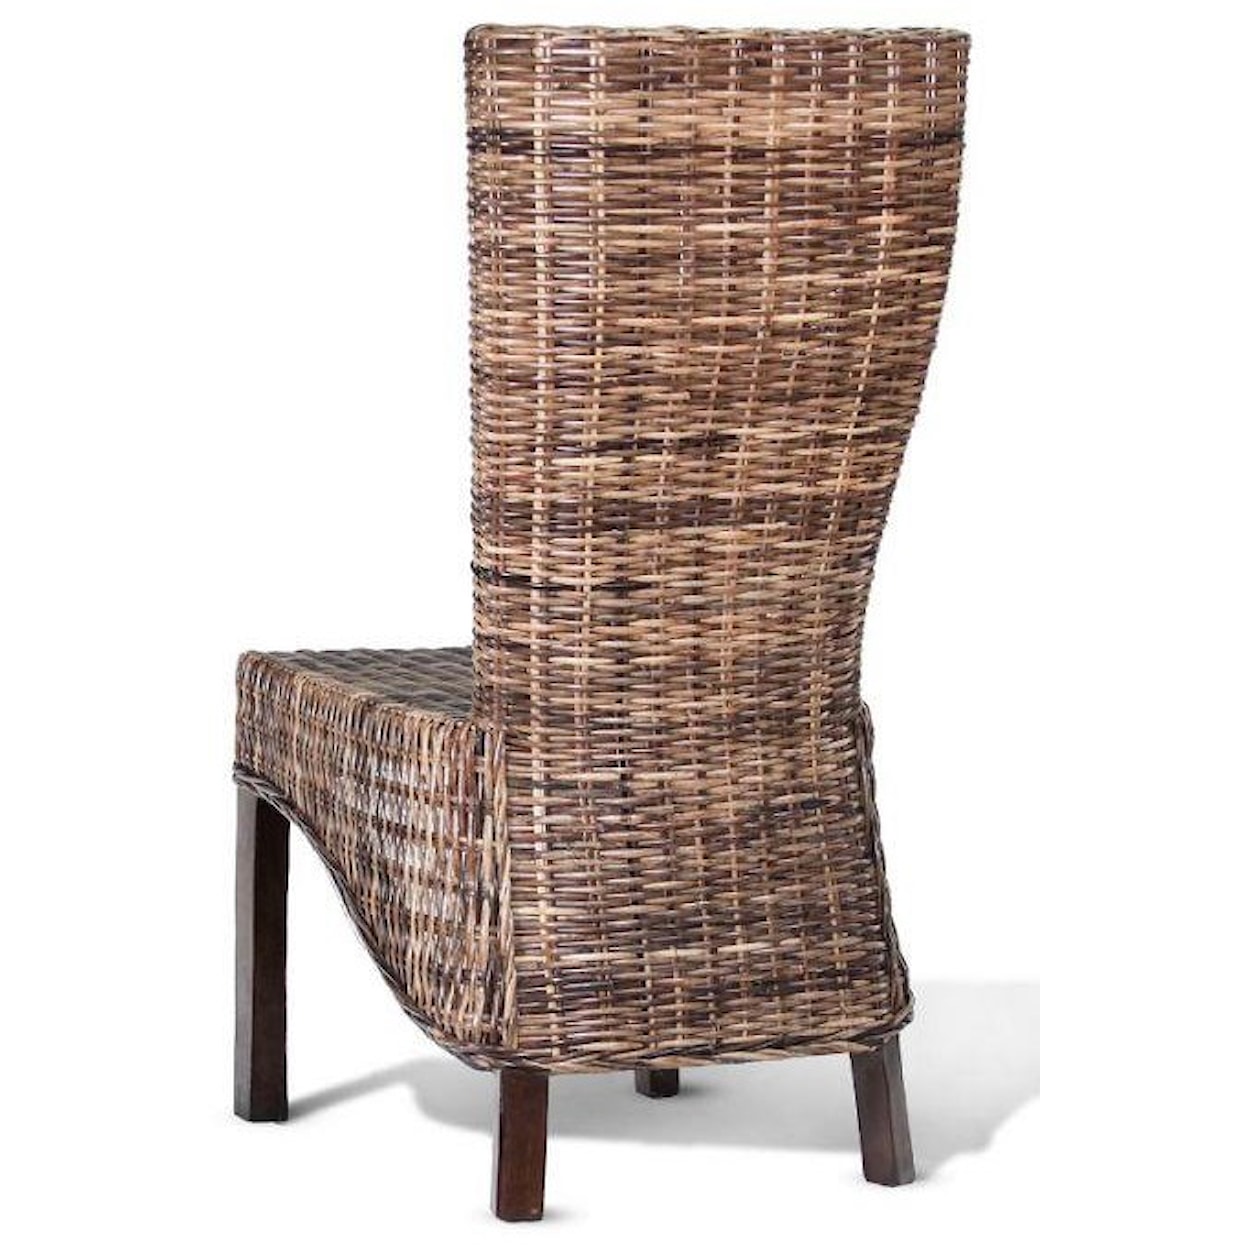 Ibolili Chairs Kauky Chair